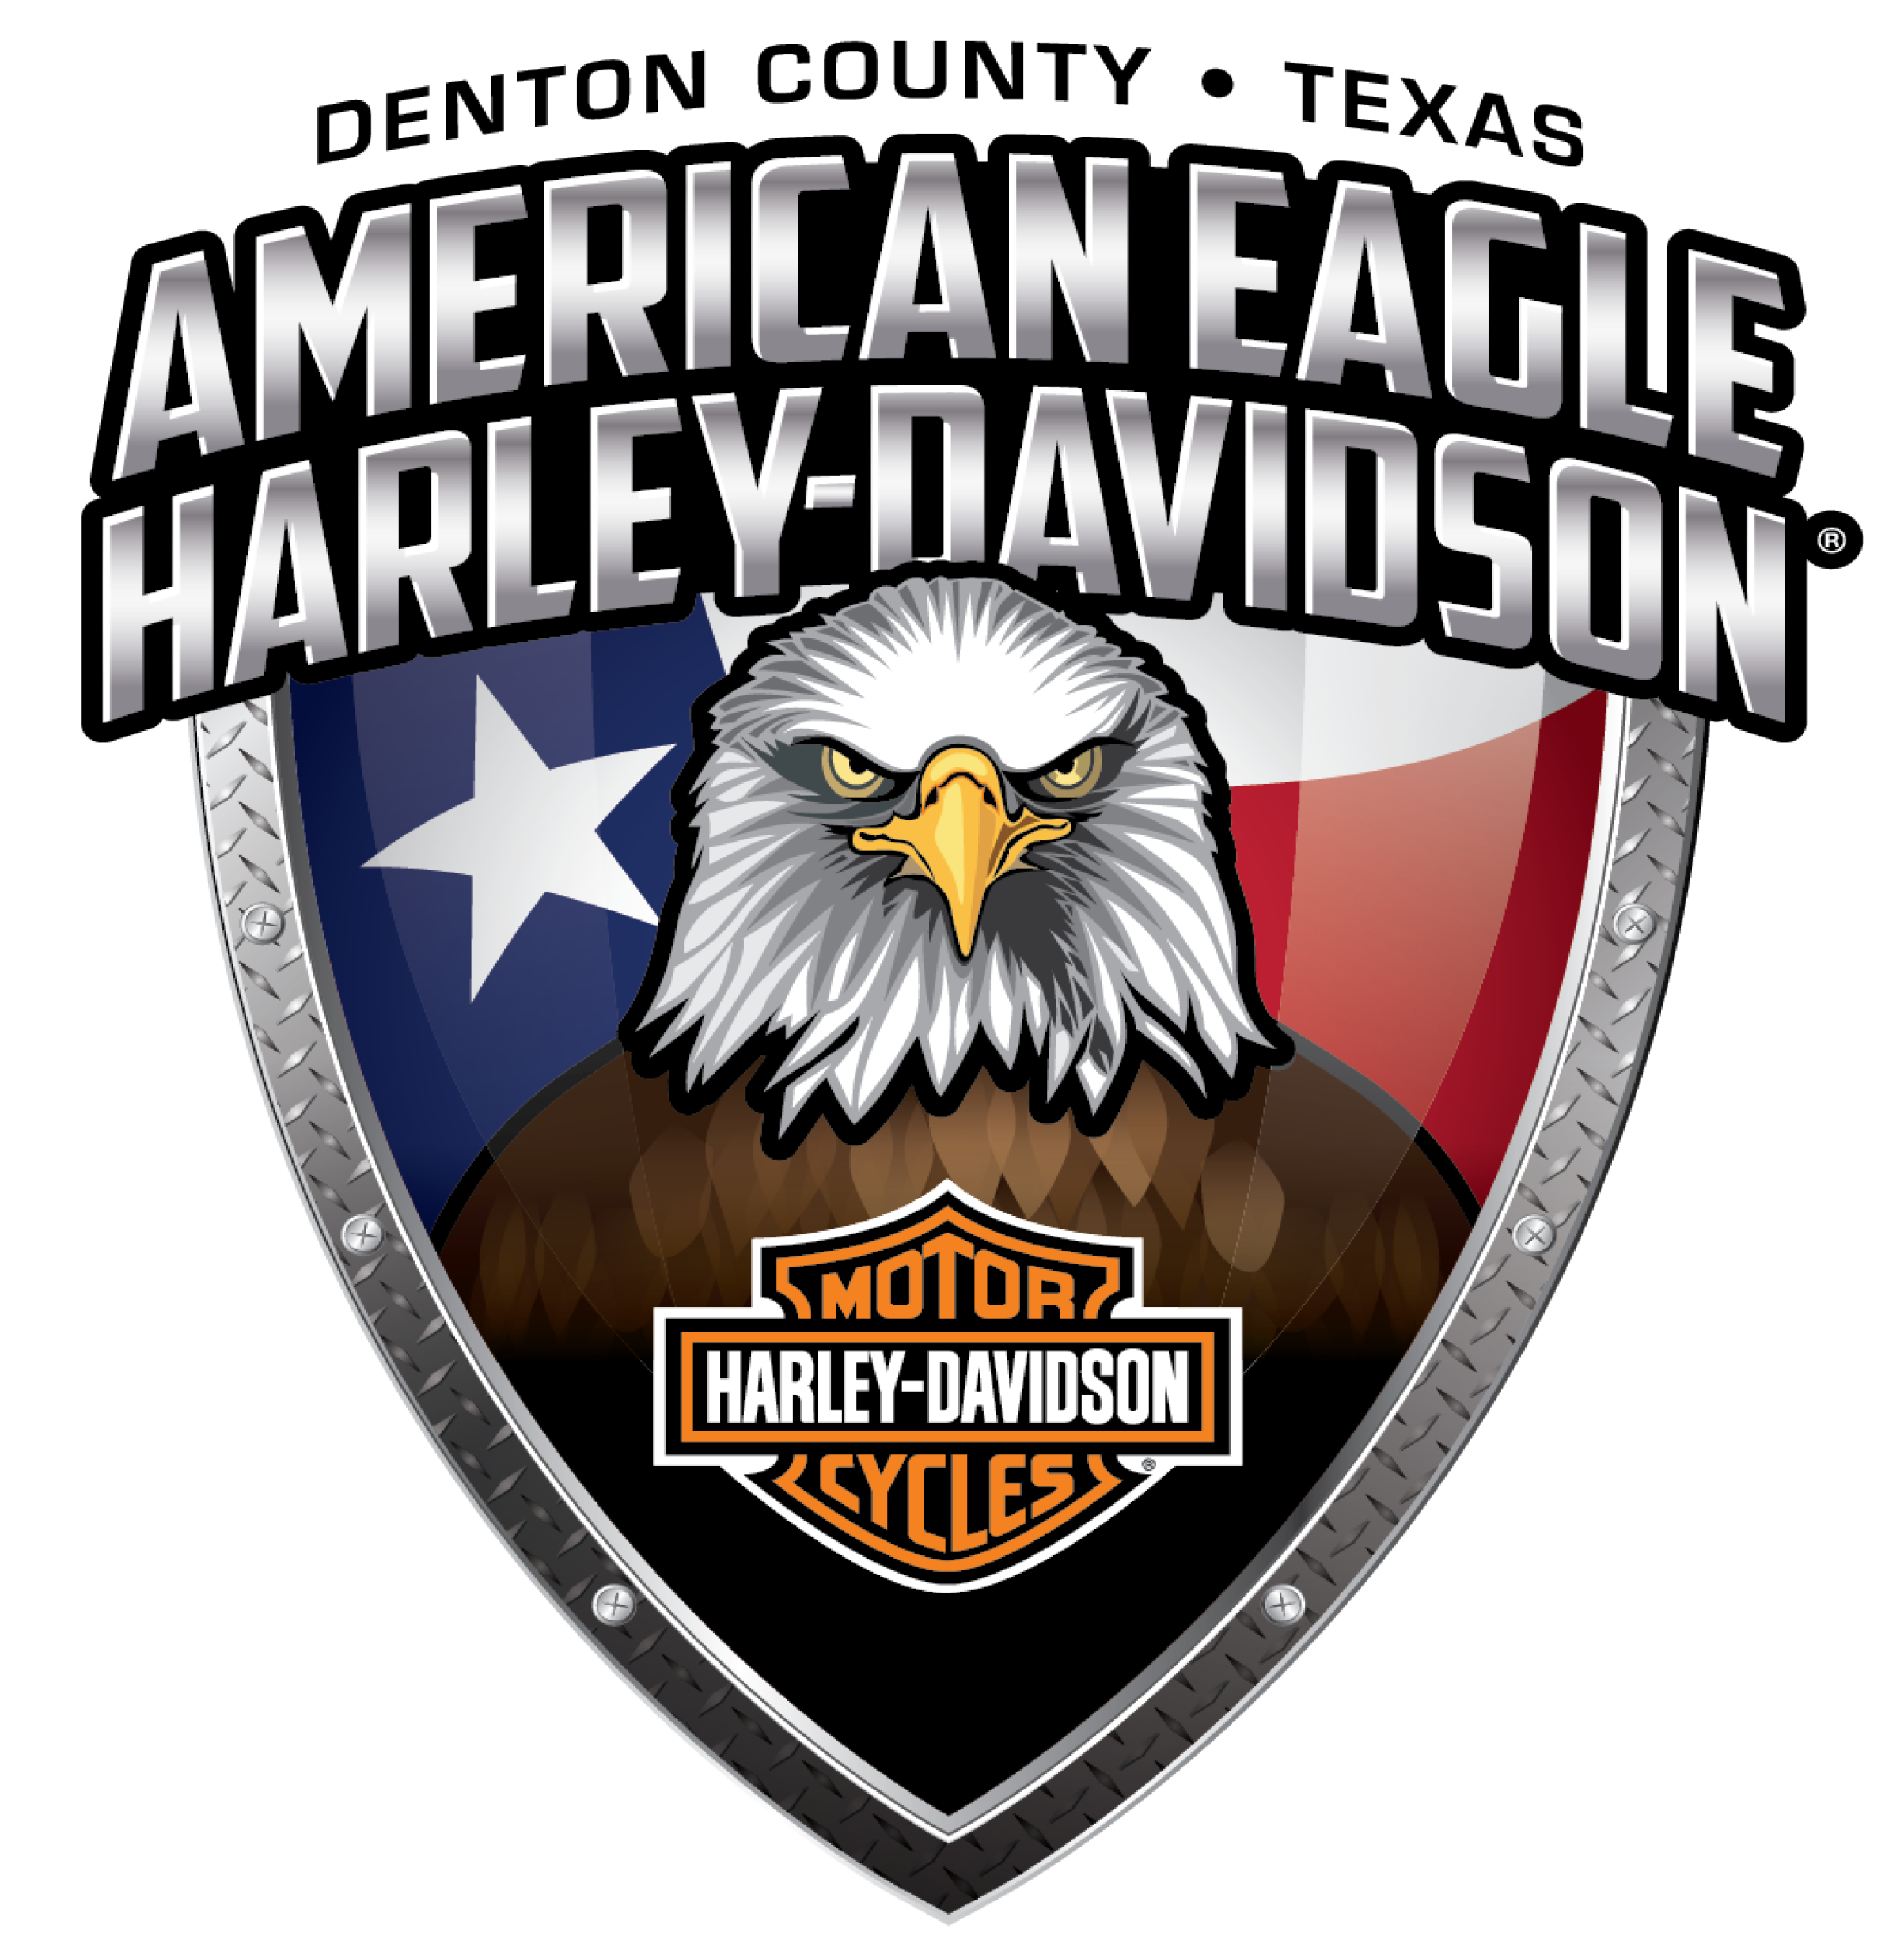 American Eagle Harley-Davidson